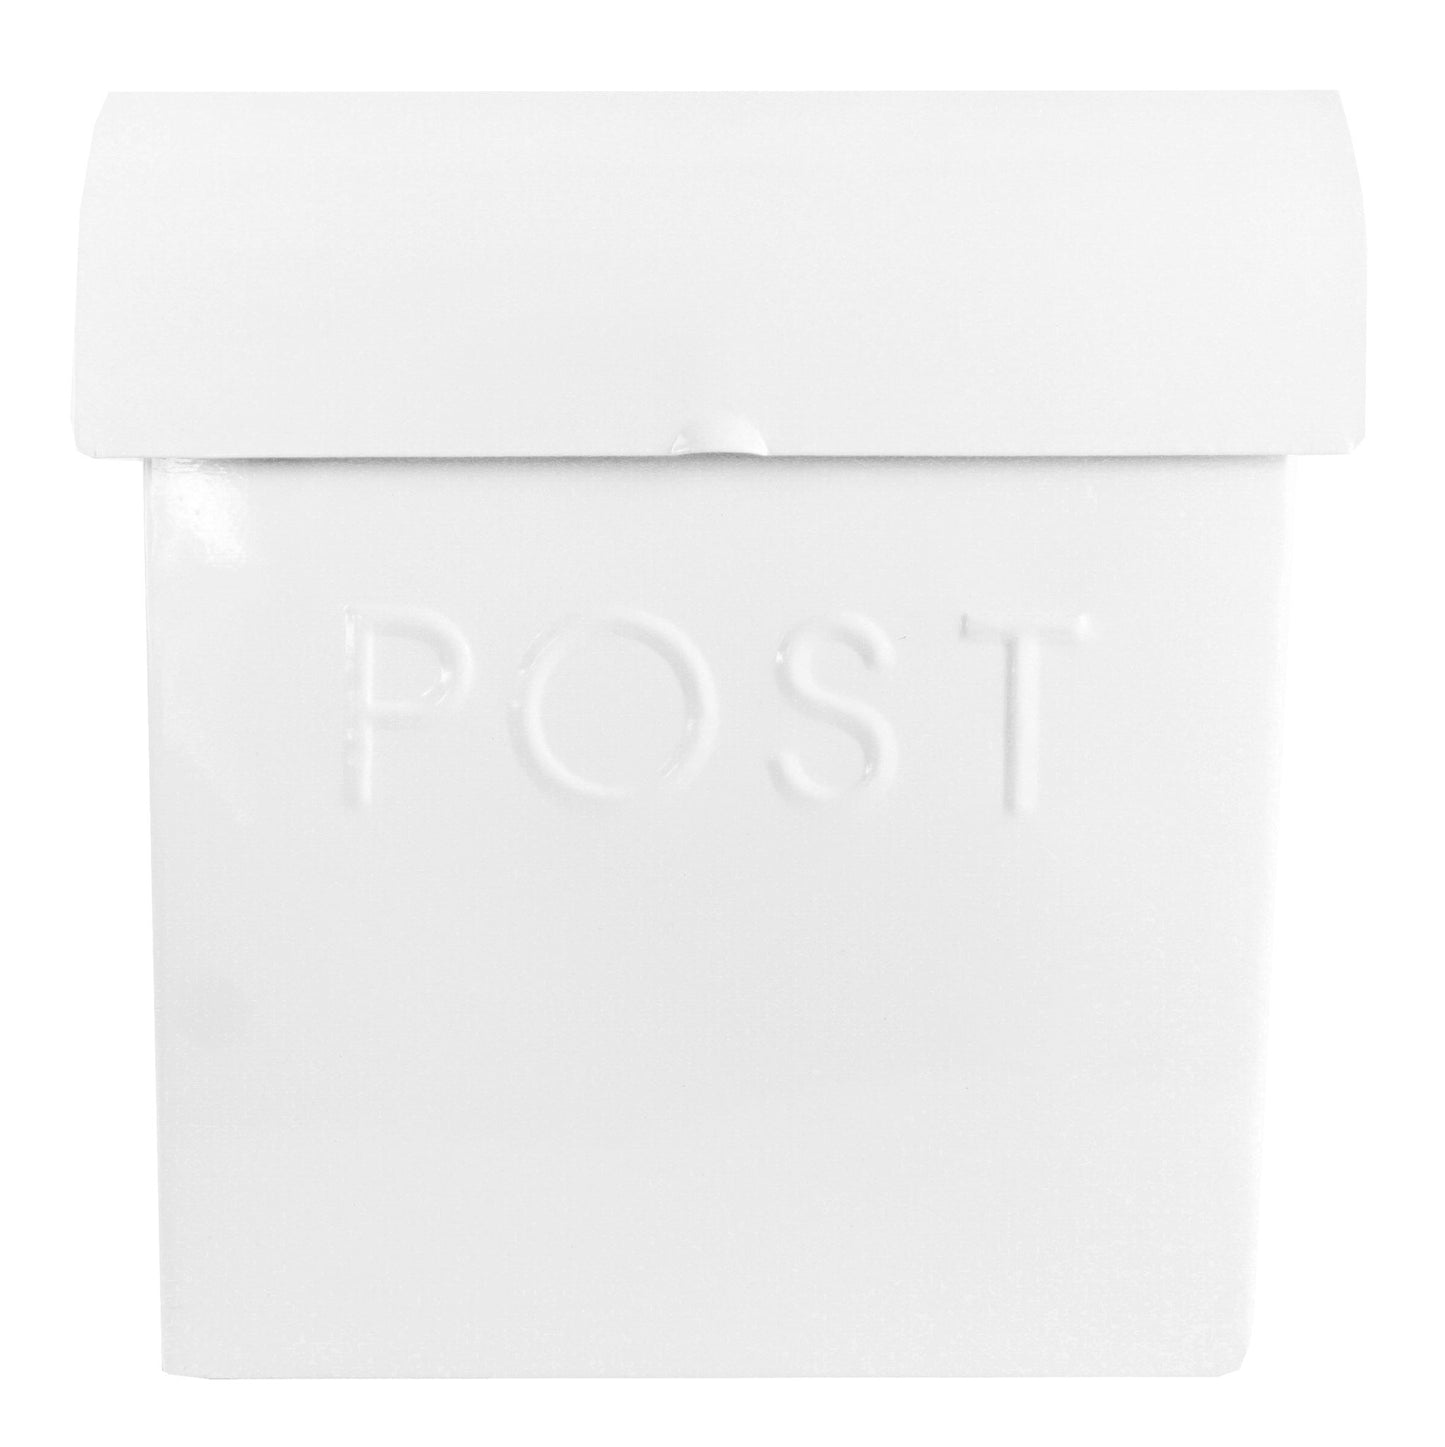 White Euro Post Mailbox